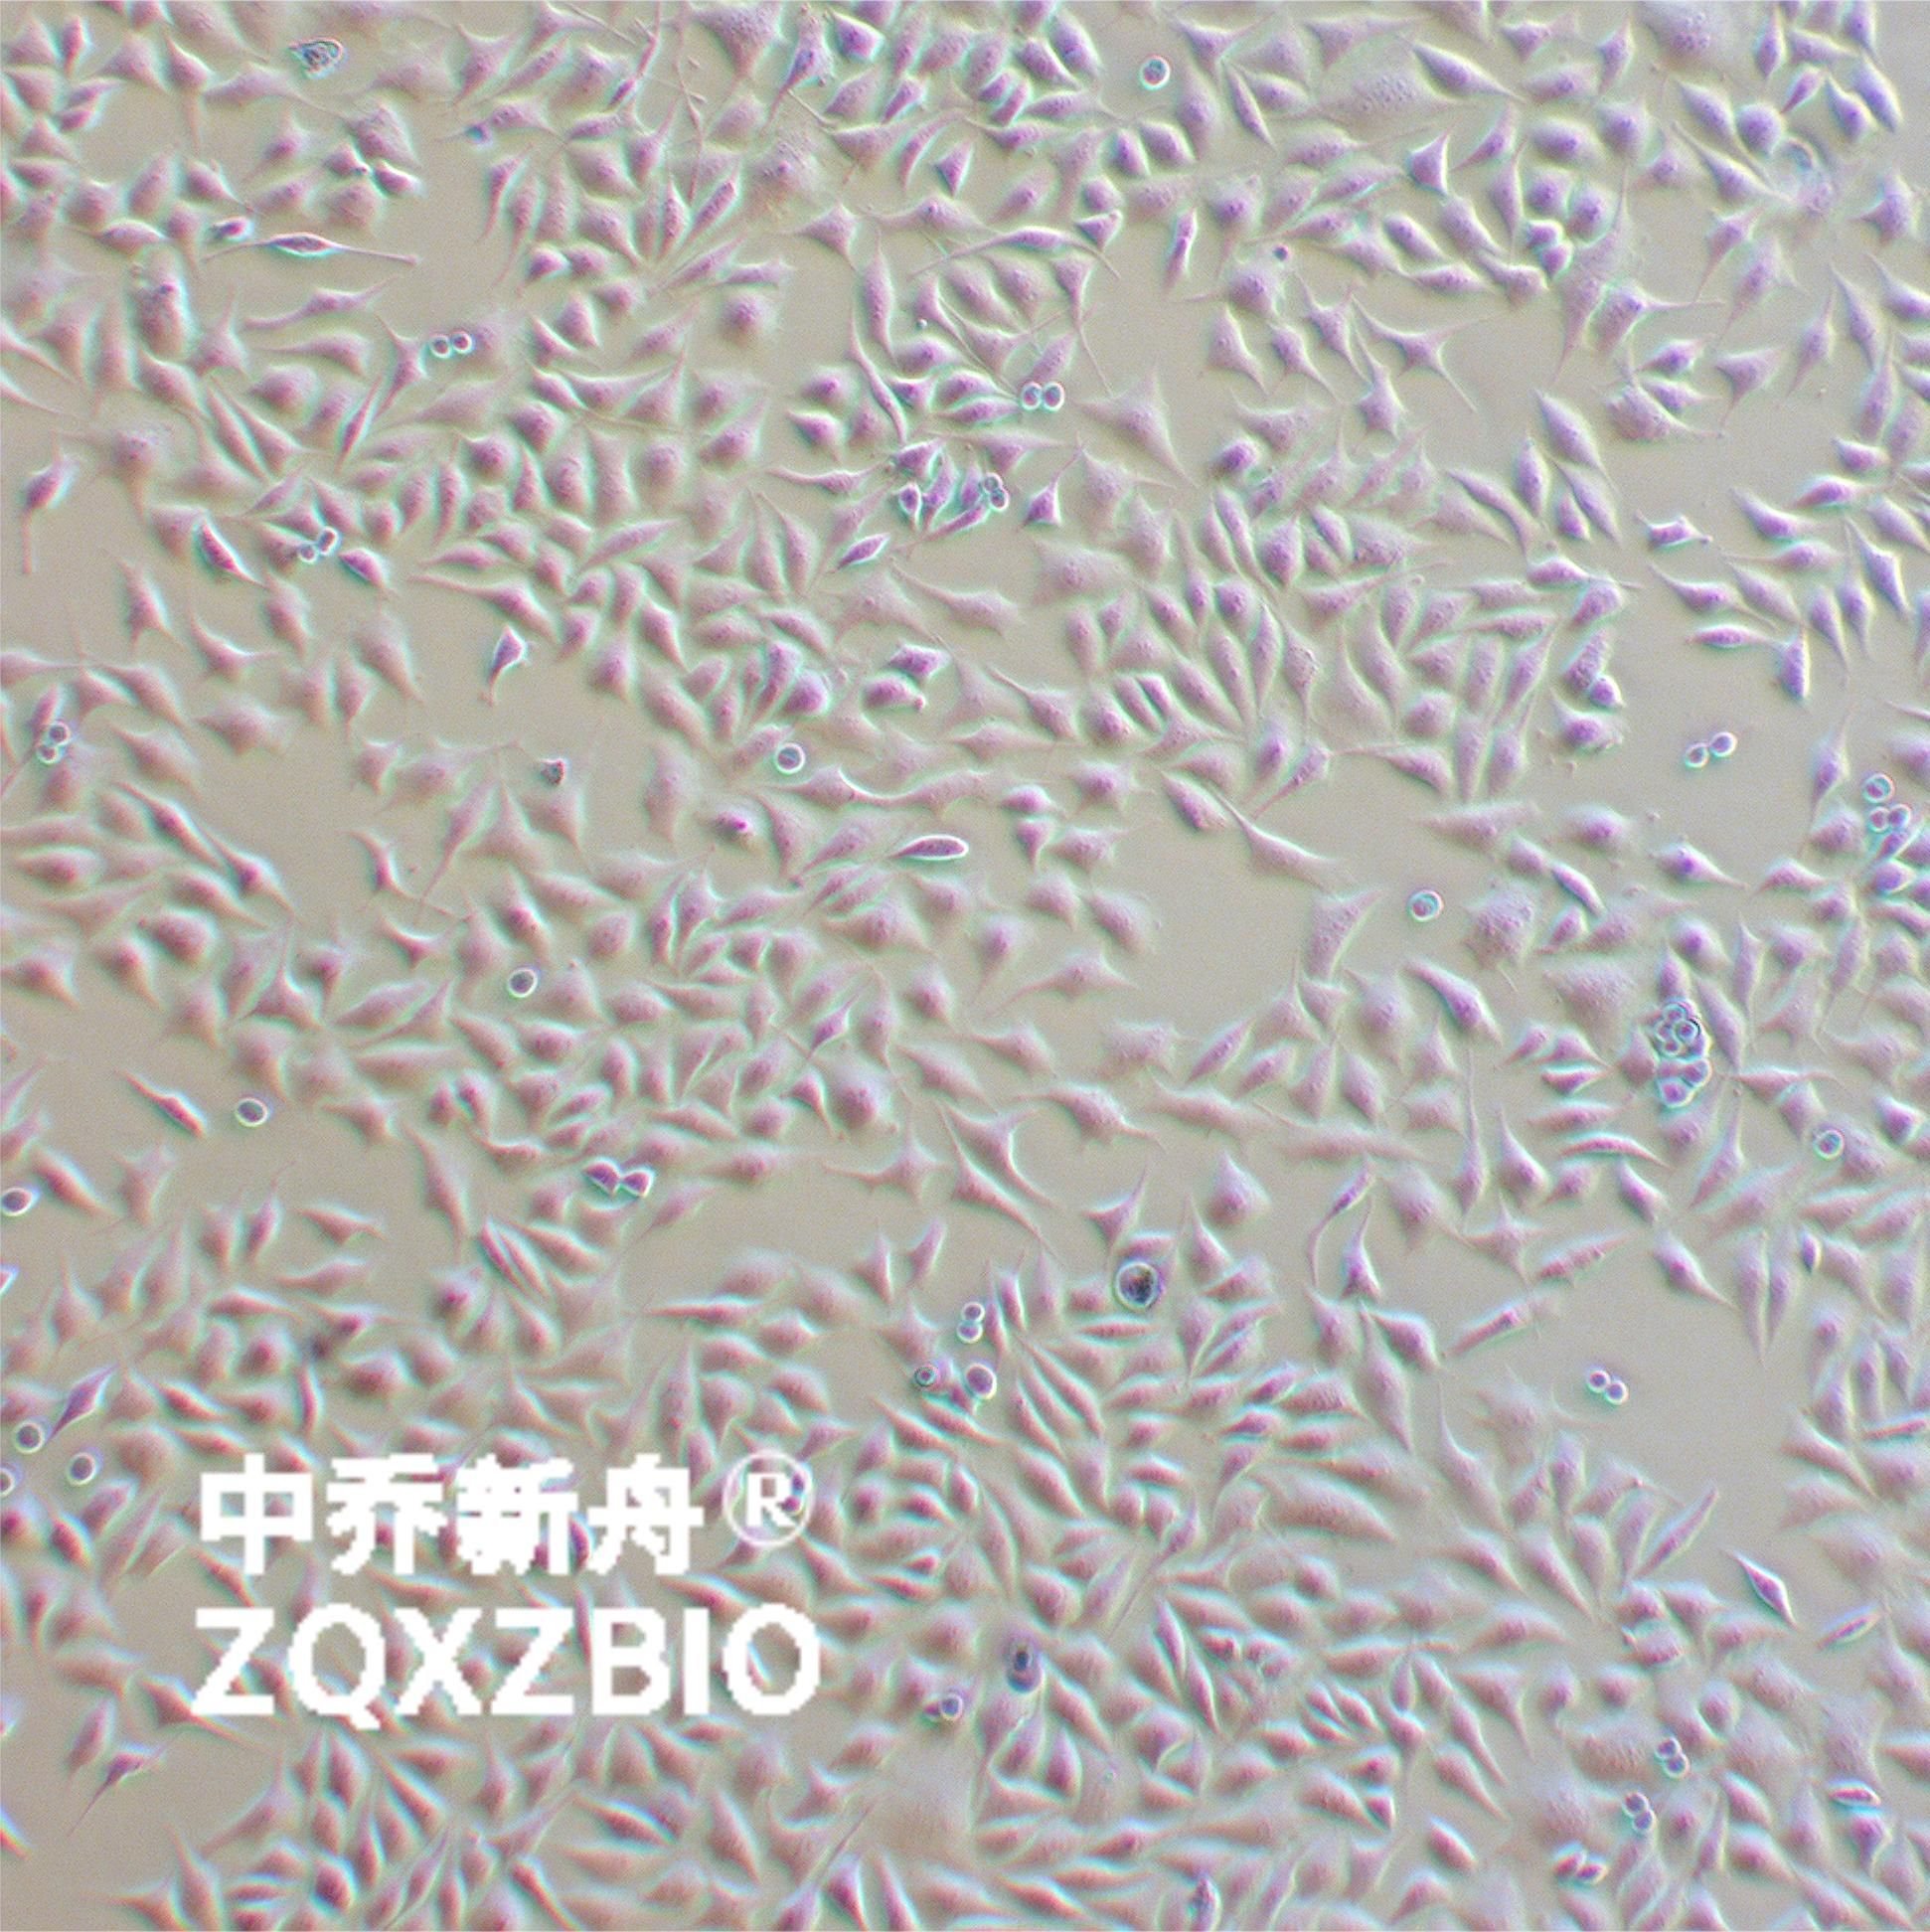 PC-3M人前列腺癌细胞